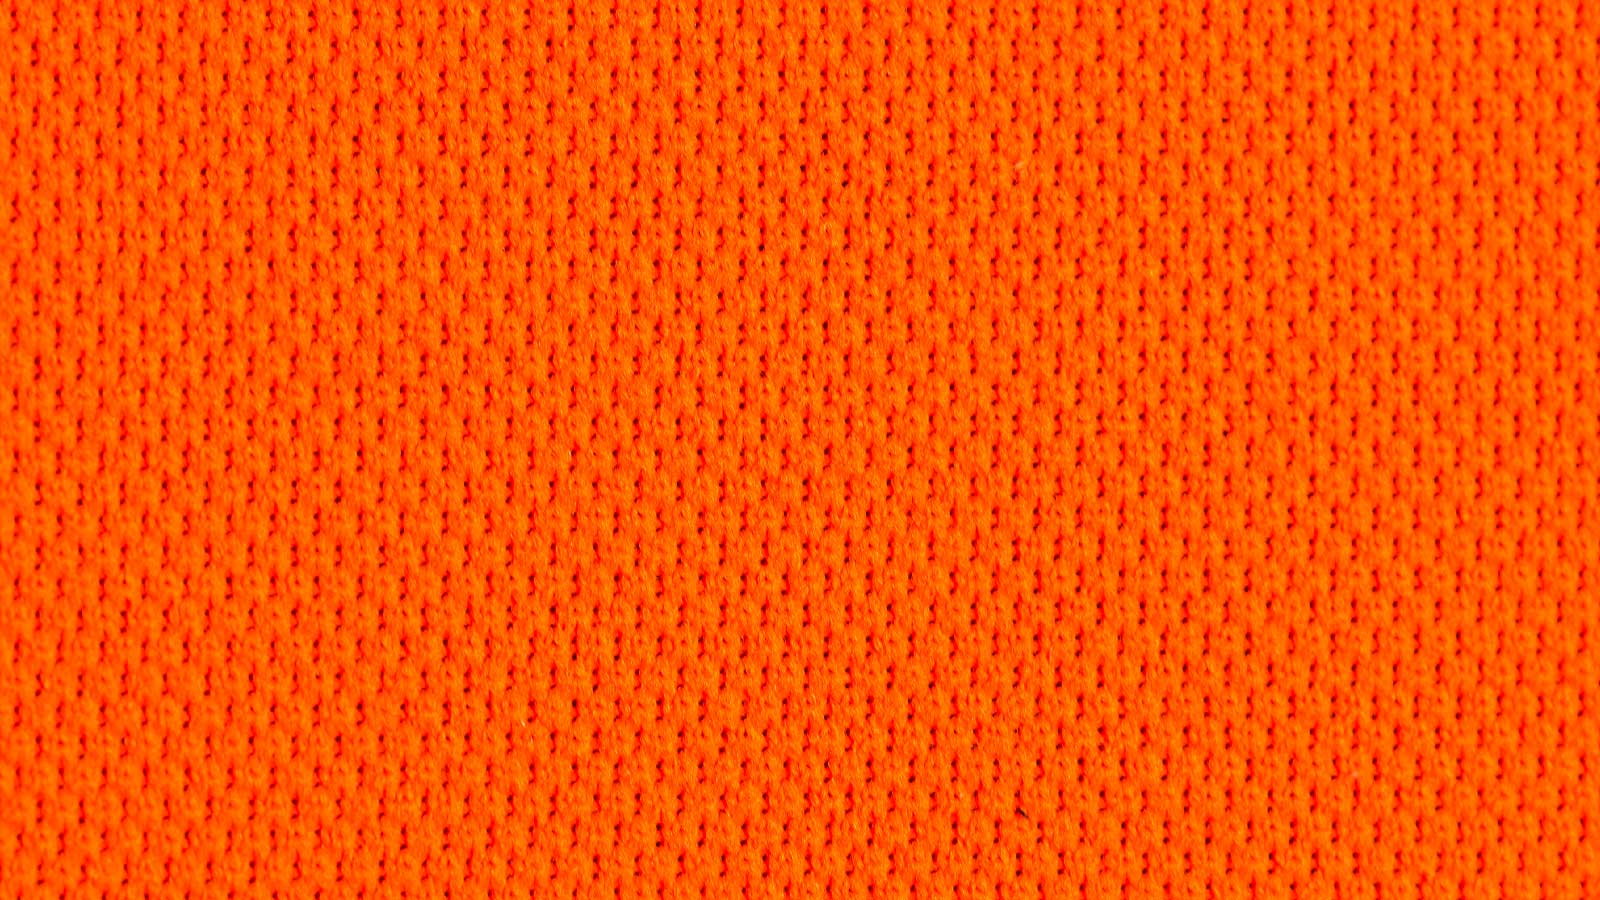 Fontex-empresa-tejidos-barcelona-producto-dry-font-digital-naranja